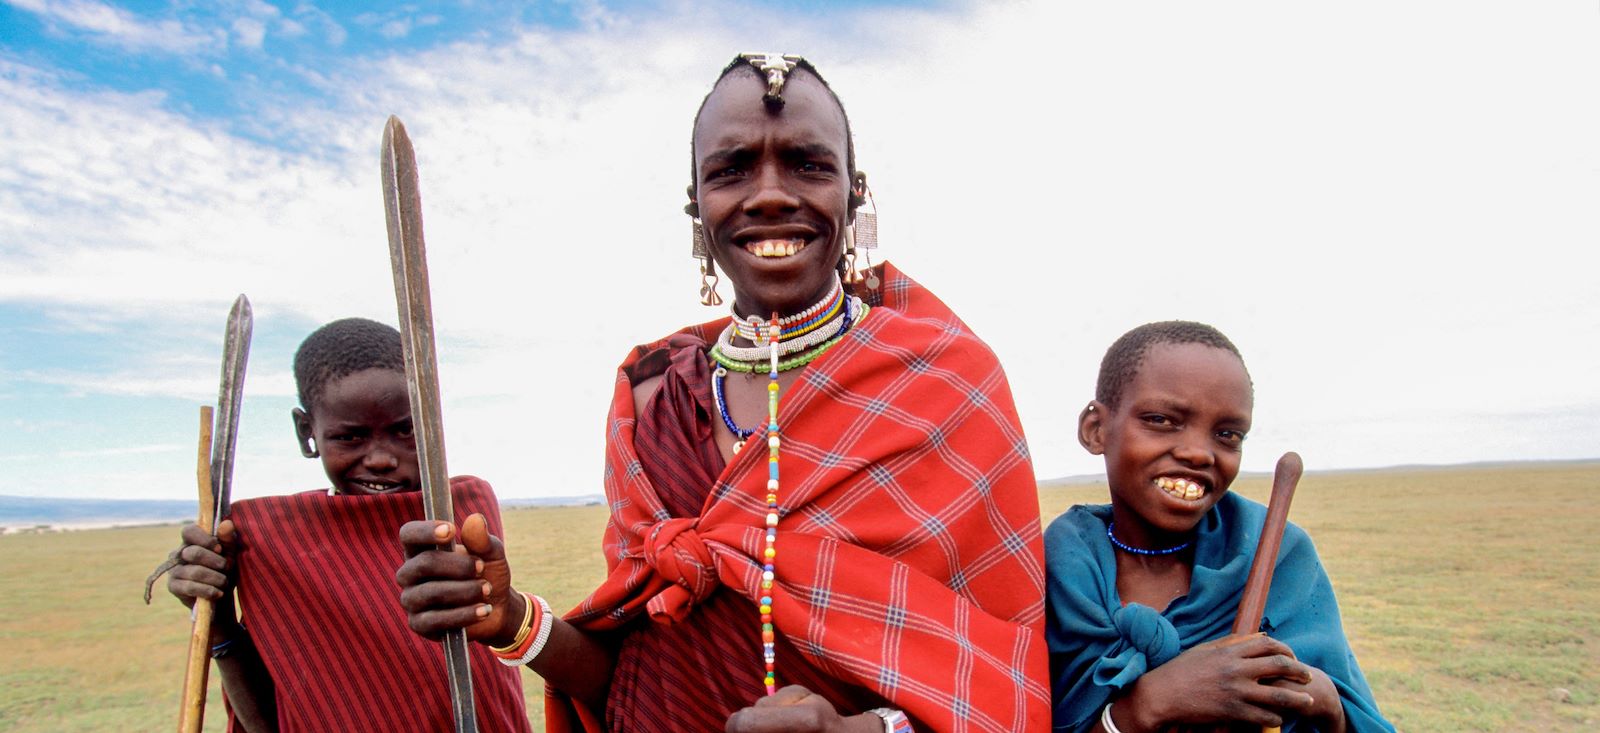 Voyage avec des animaux : Ma petite tribu en pays Maasaï !